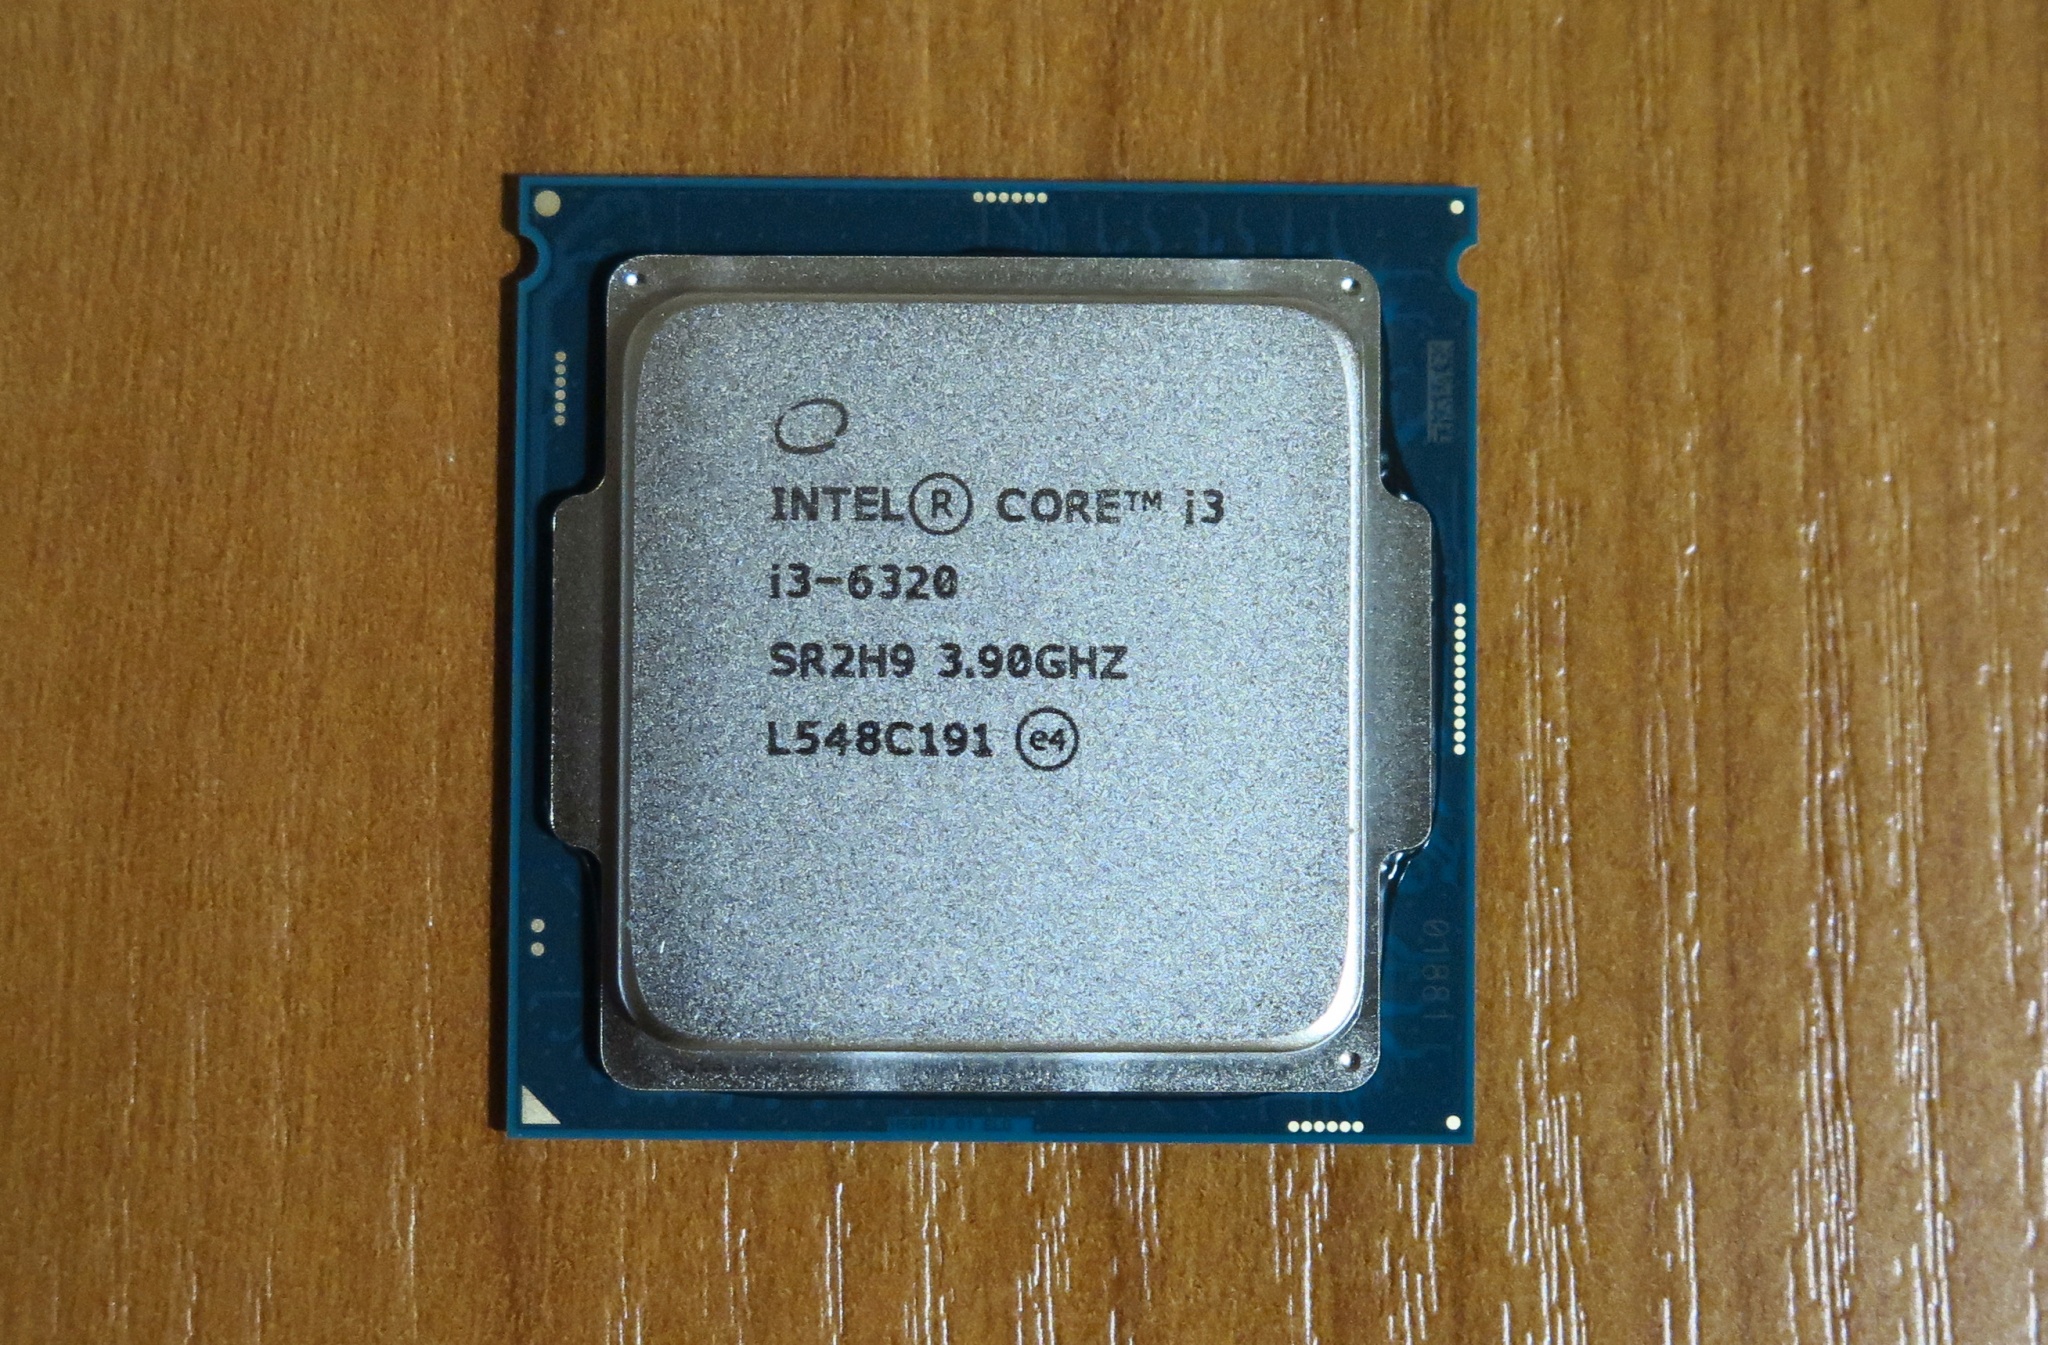 Заменить интел. Intel Core i3-6320. Intel Core i3 6320 характеристики. Intel(r) Core(TM) i3-6320 CPU @ 3.90GHZ 3.90 GHZ. Intel(r) Core(TM) i3-3210.